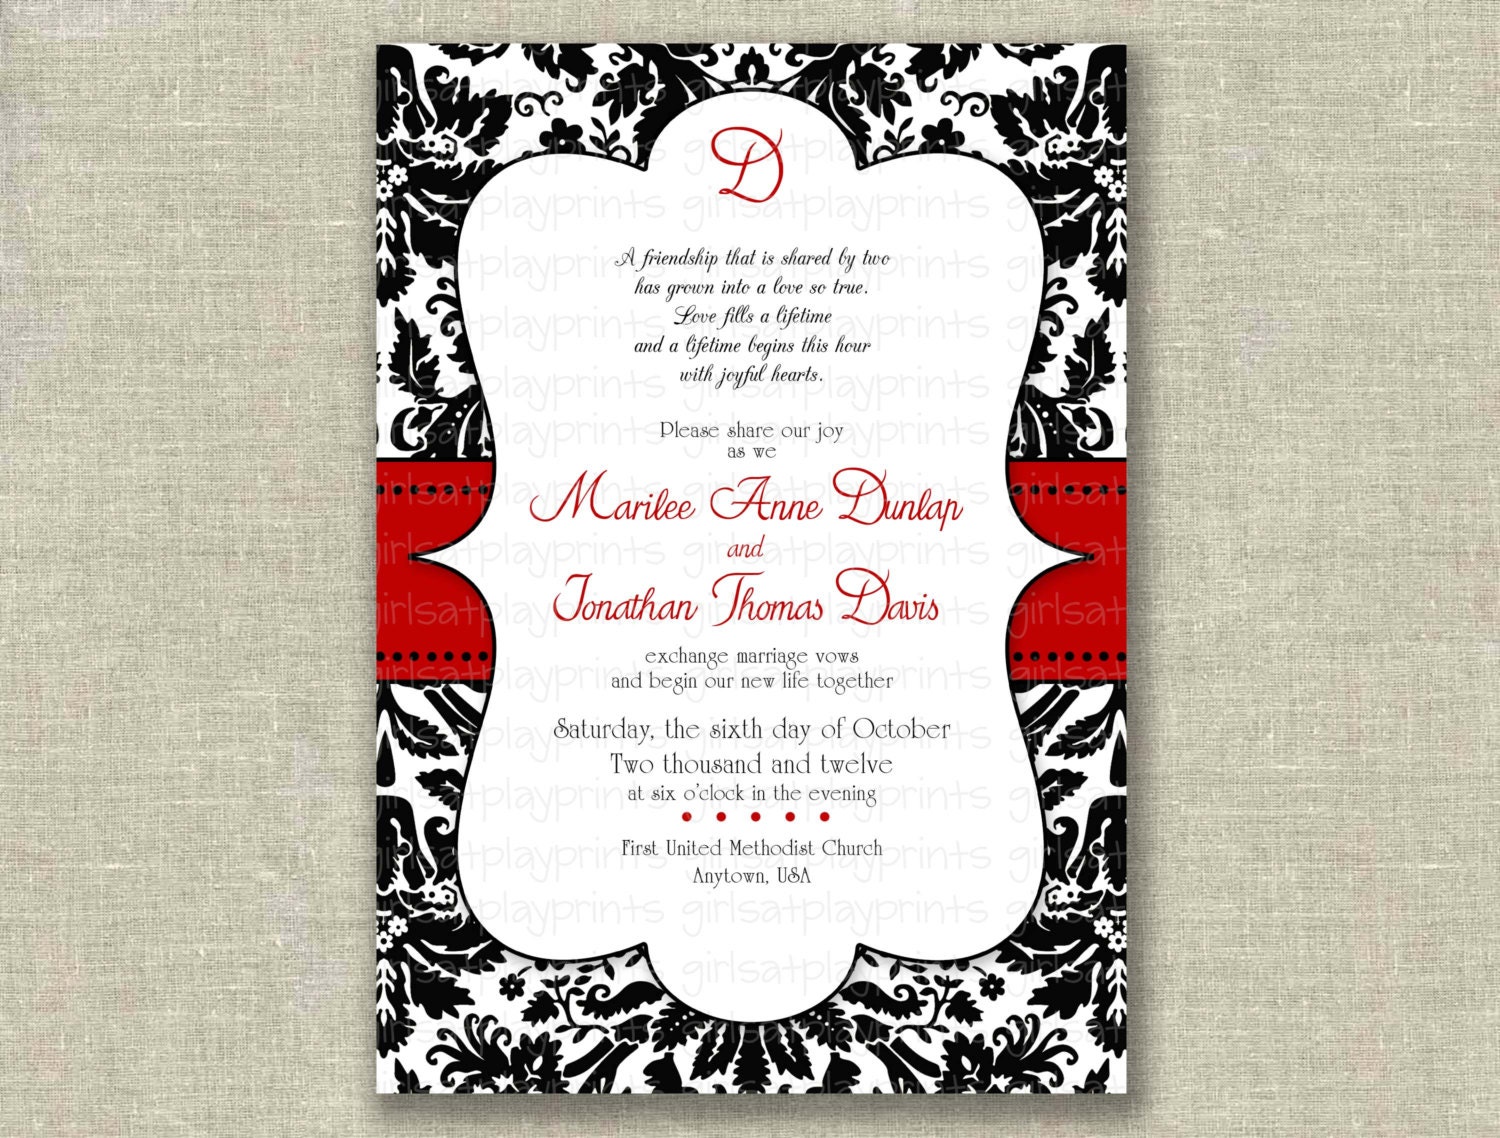 Black and red wedding invitation kits